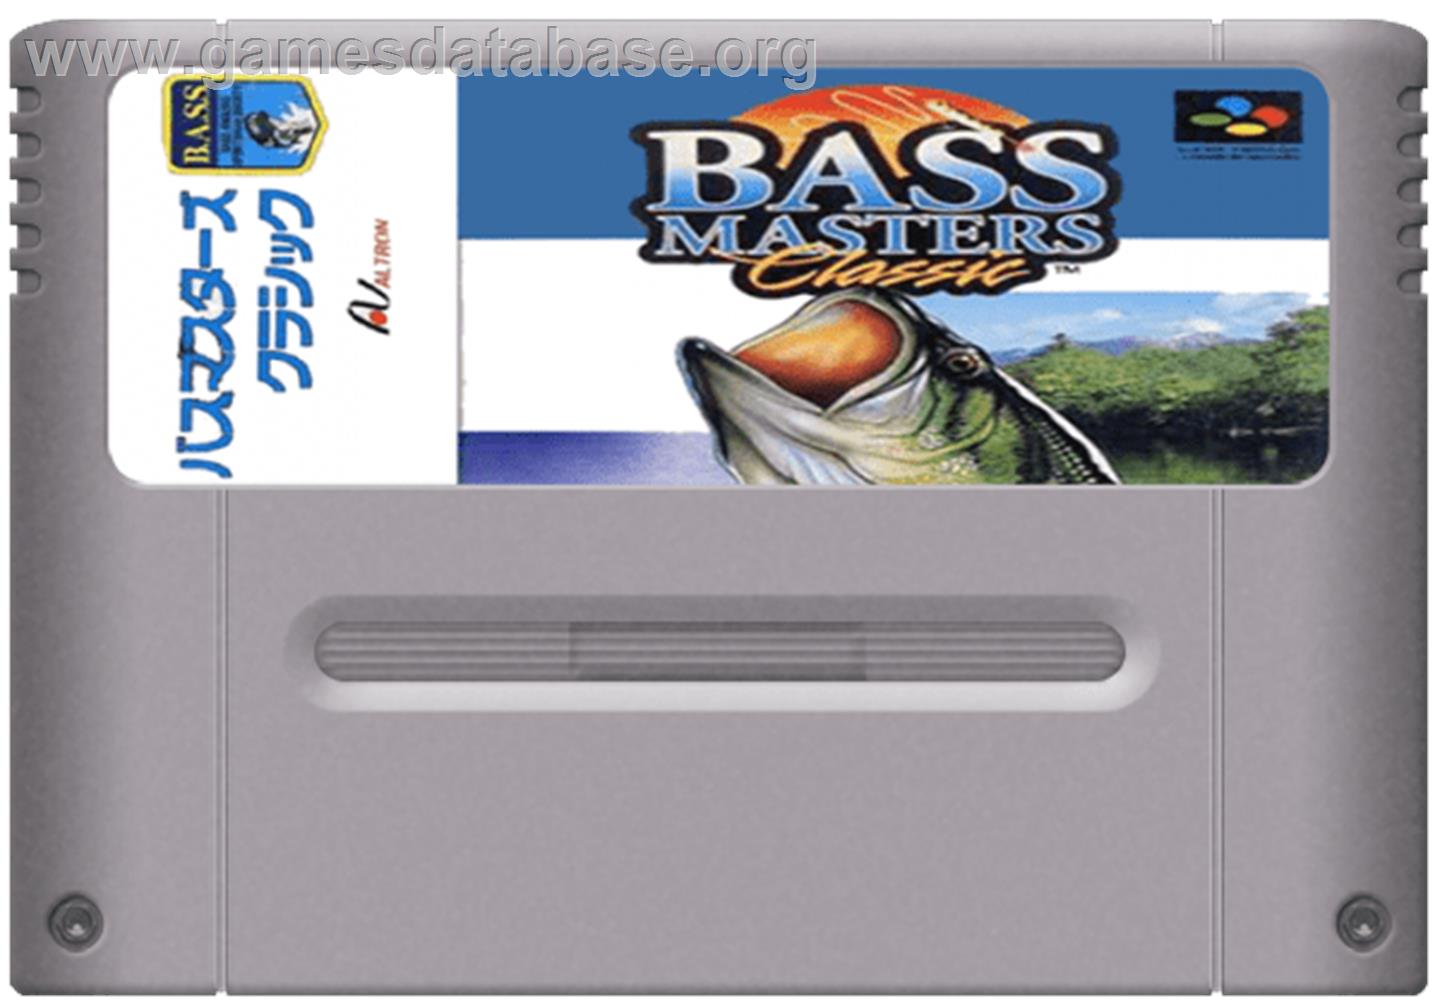 BASS Masters Classic - Nintendo SNES - Artwork - Cartridge